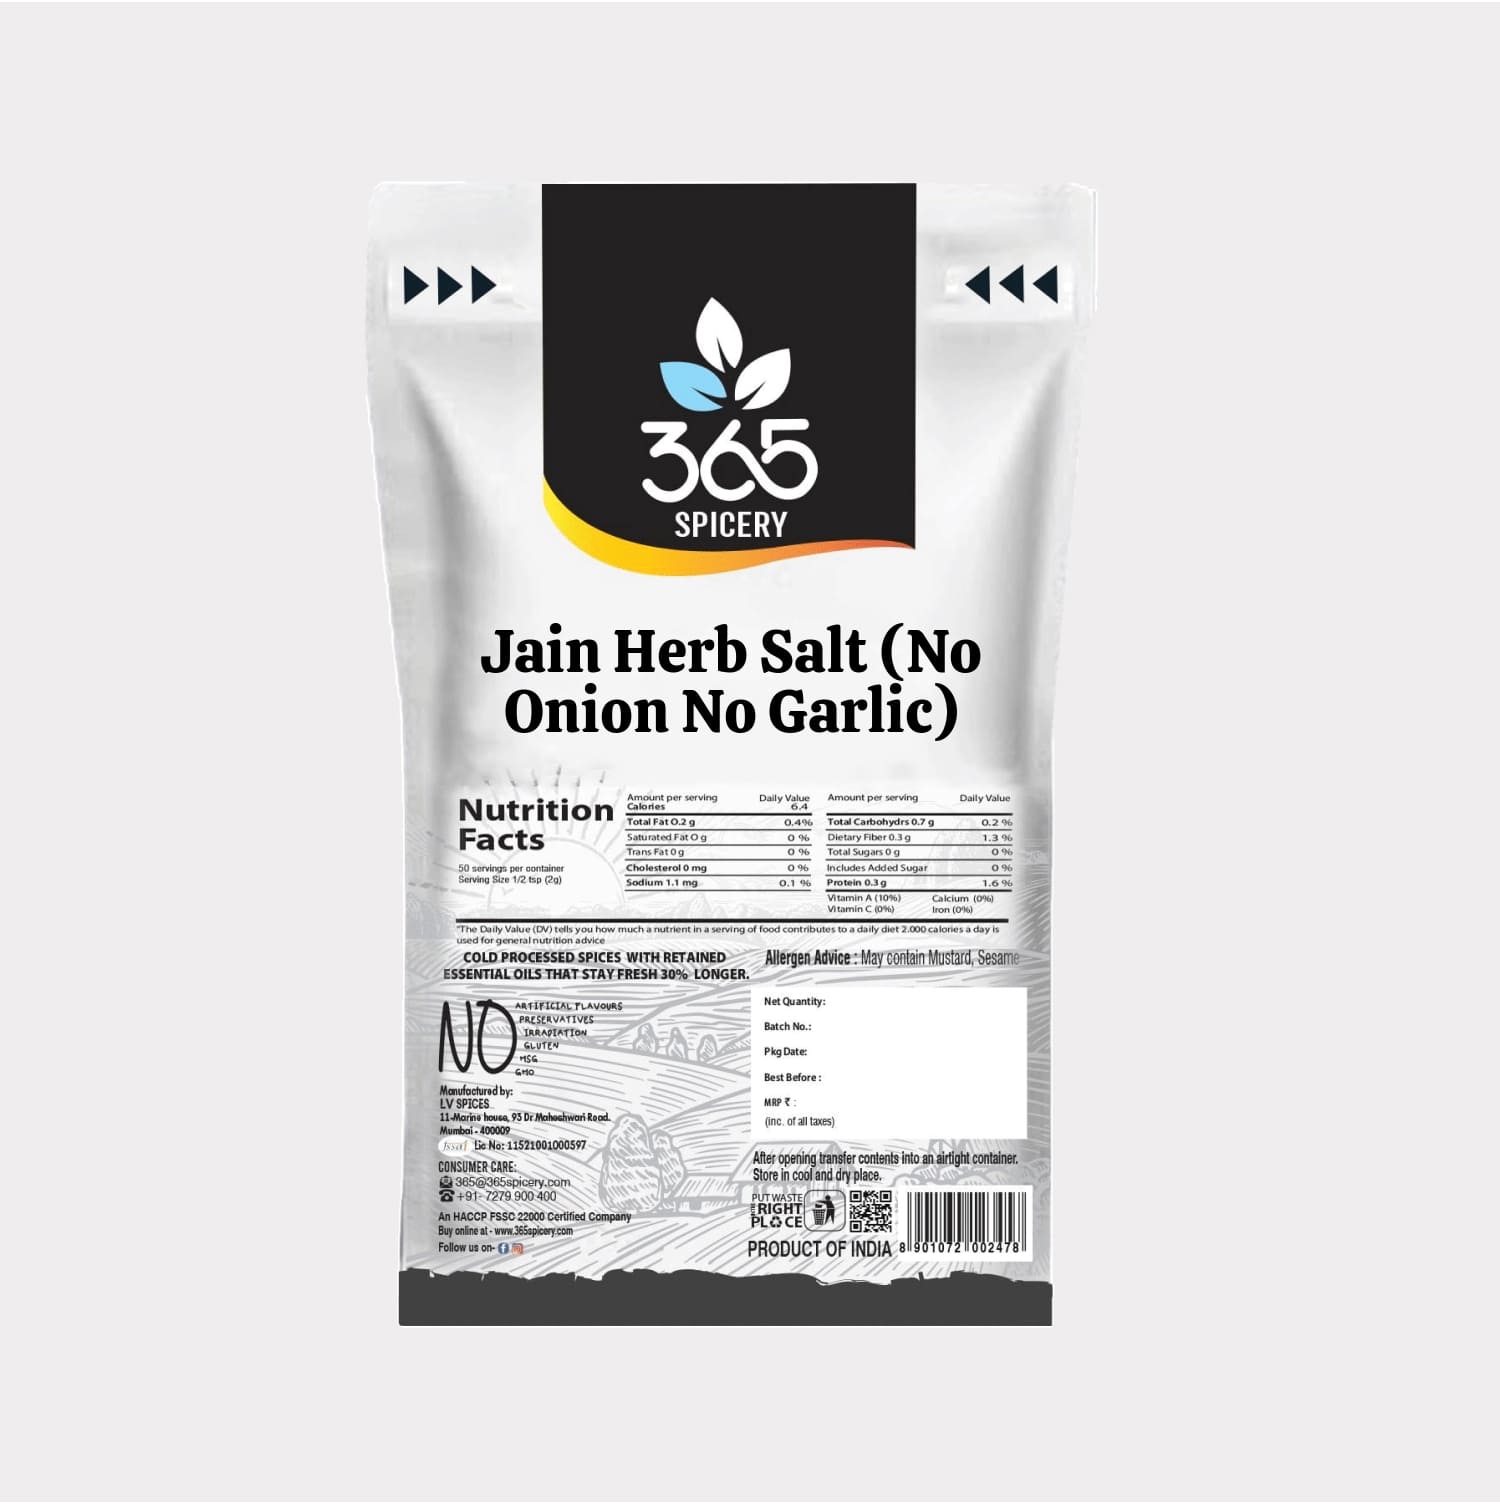 Jain Herb Salt (No Onion No Garlic)